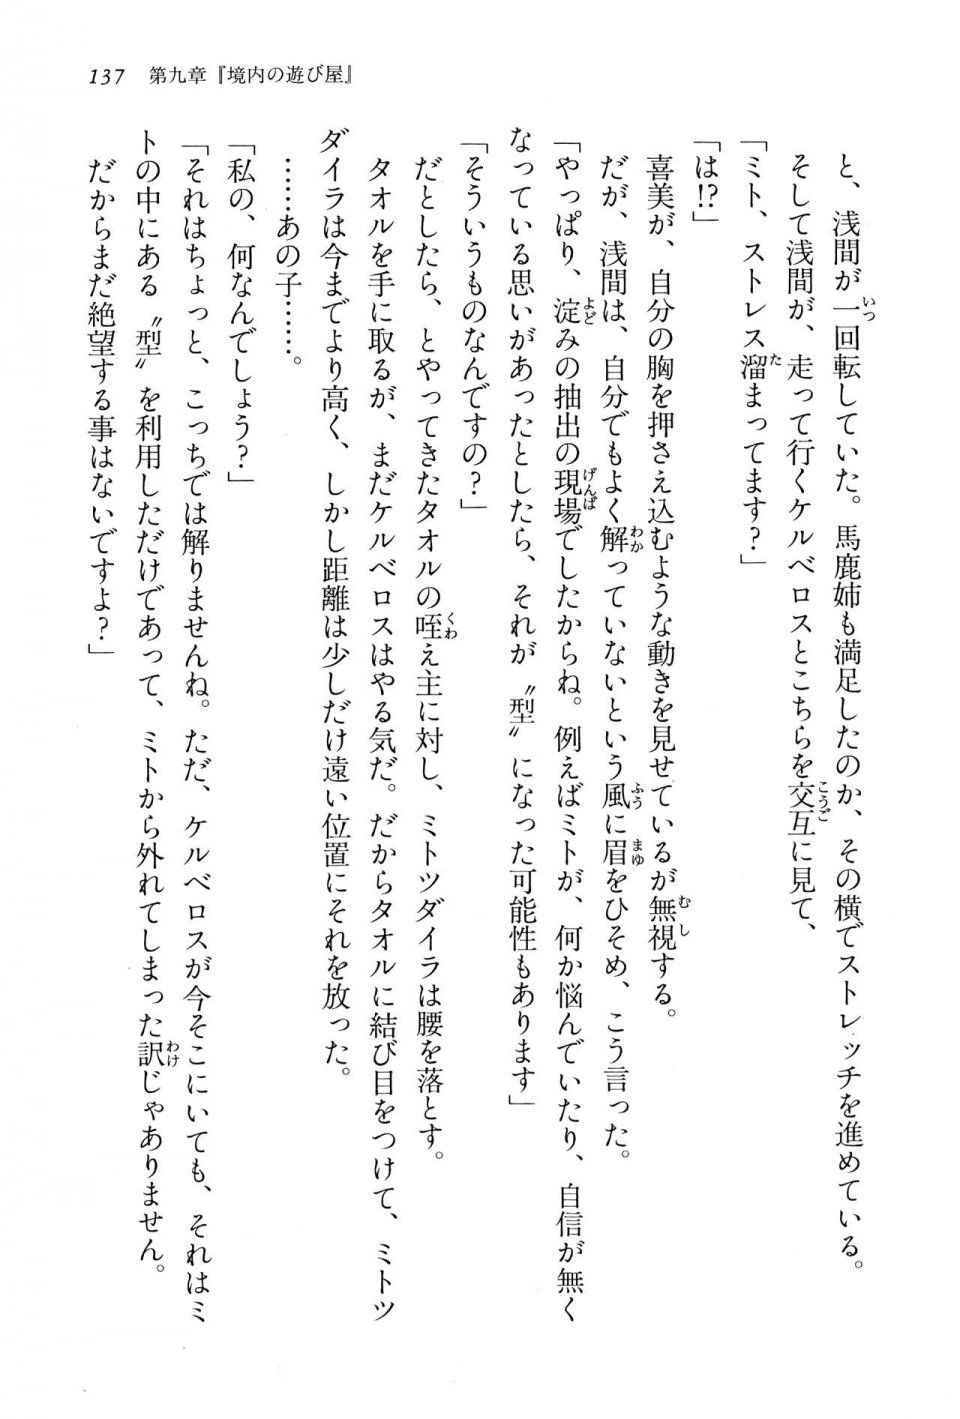 Kyoukai Senjou no Horizon BD Special Mininovel Vol 6(3B) - Photo #141